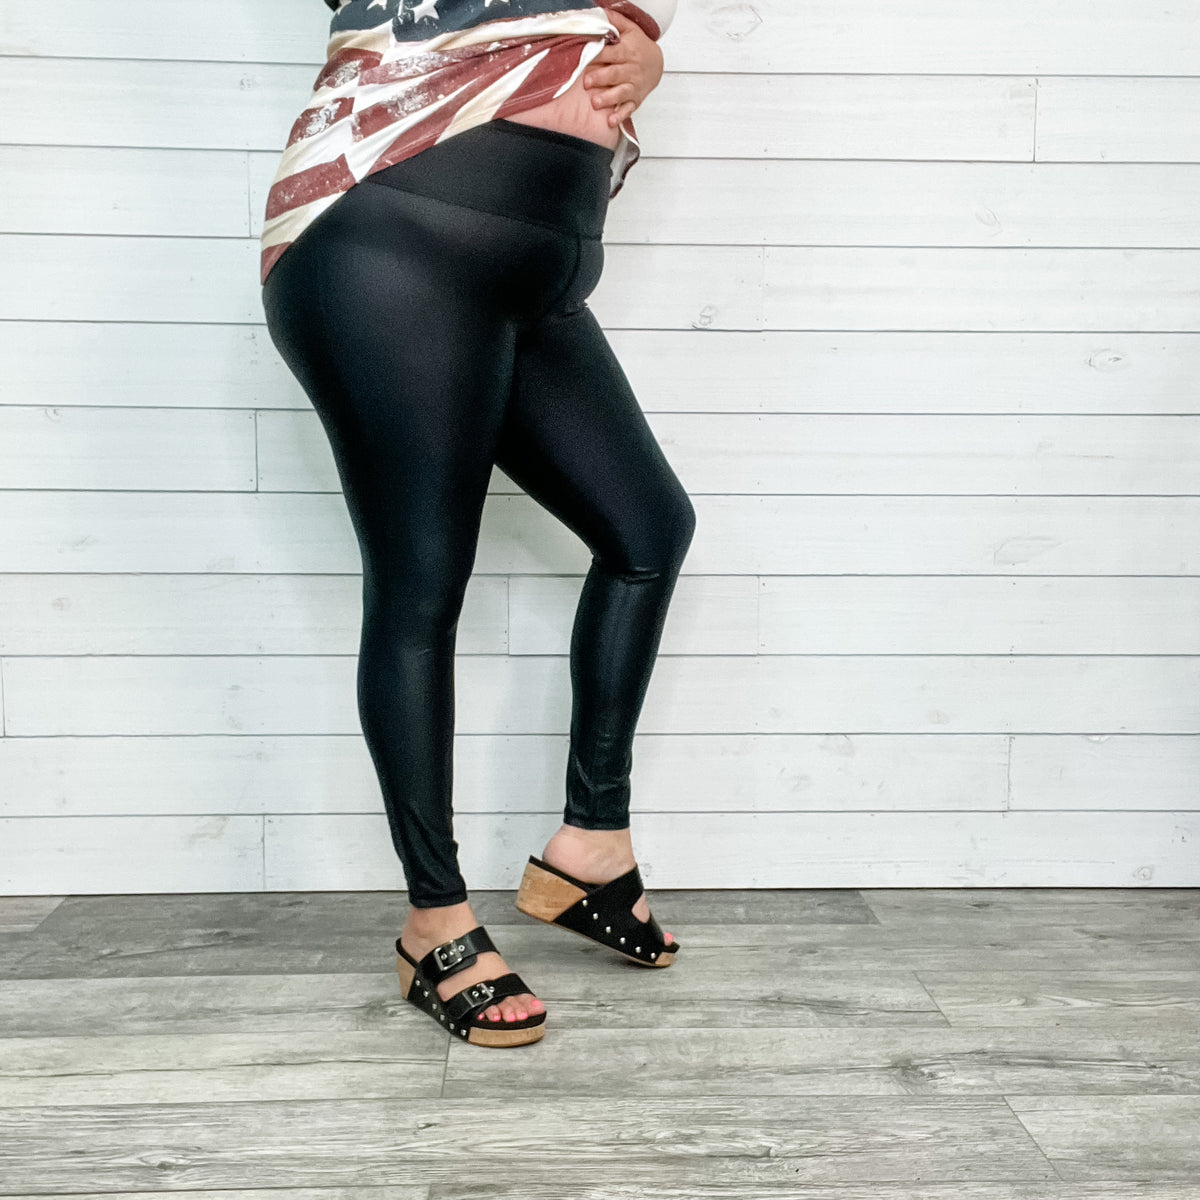 Zenana Leggings Womans Plus Size 3X Black Everyday Light Weight